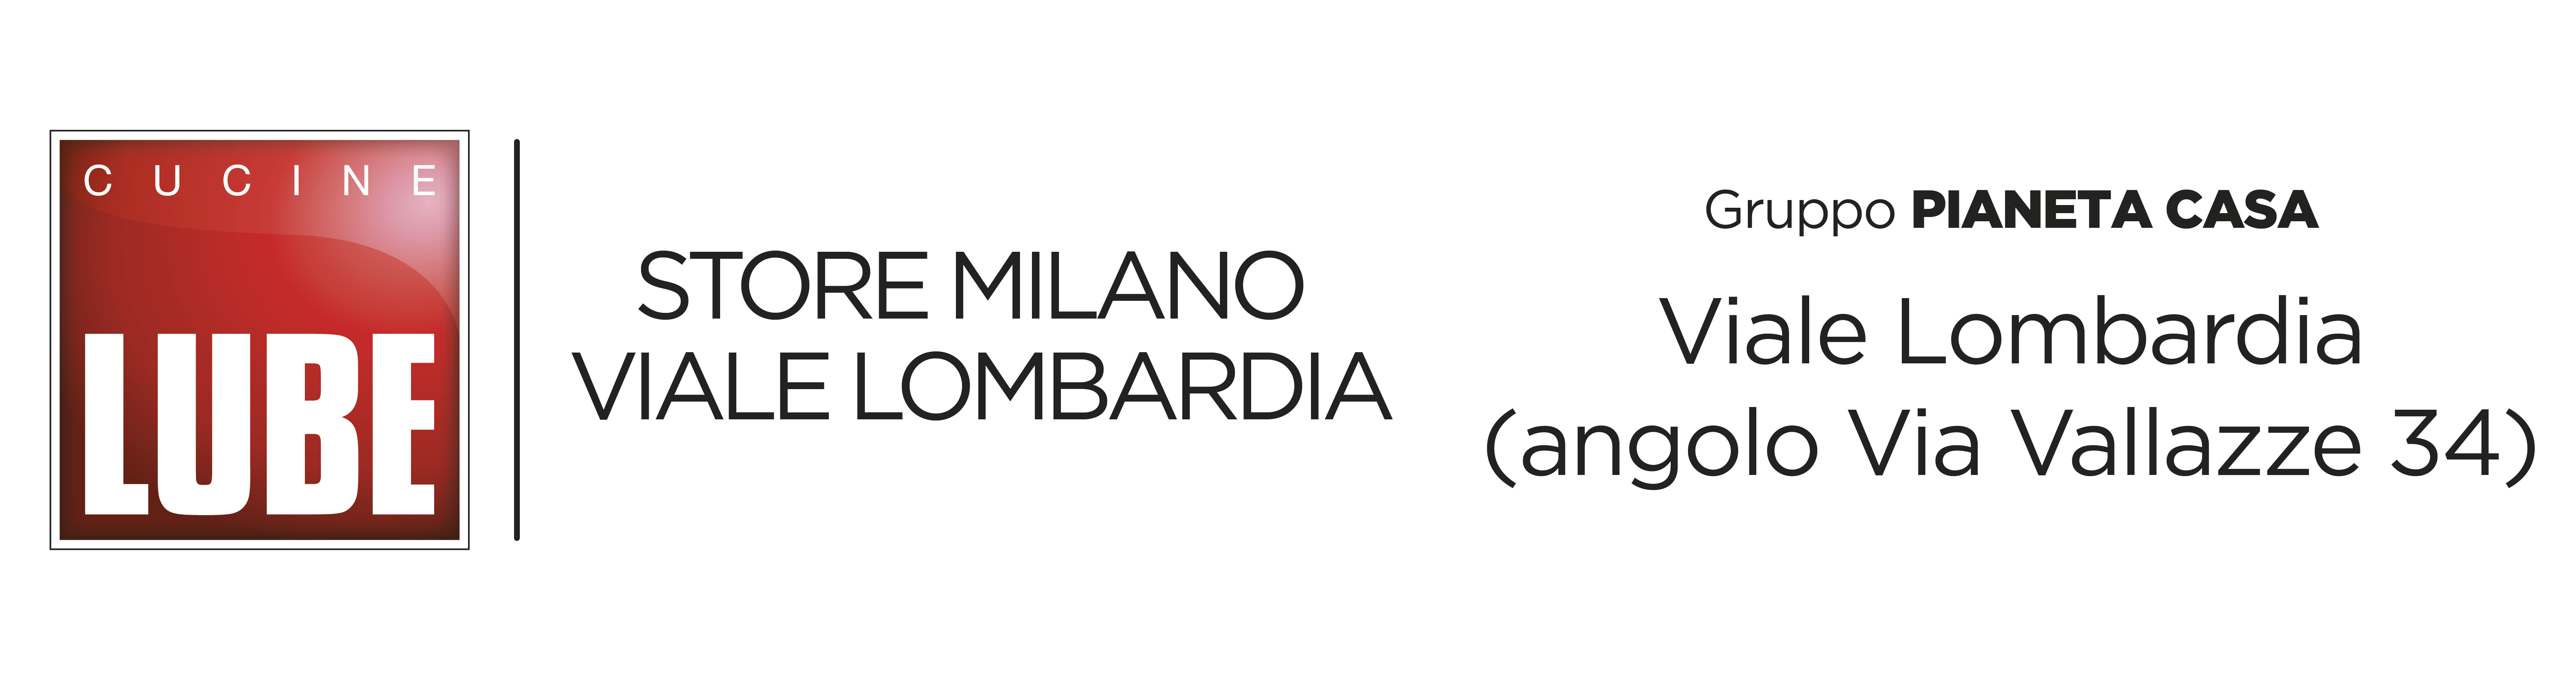 Lube Store Milano Viale Lombardia